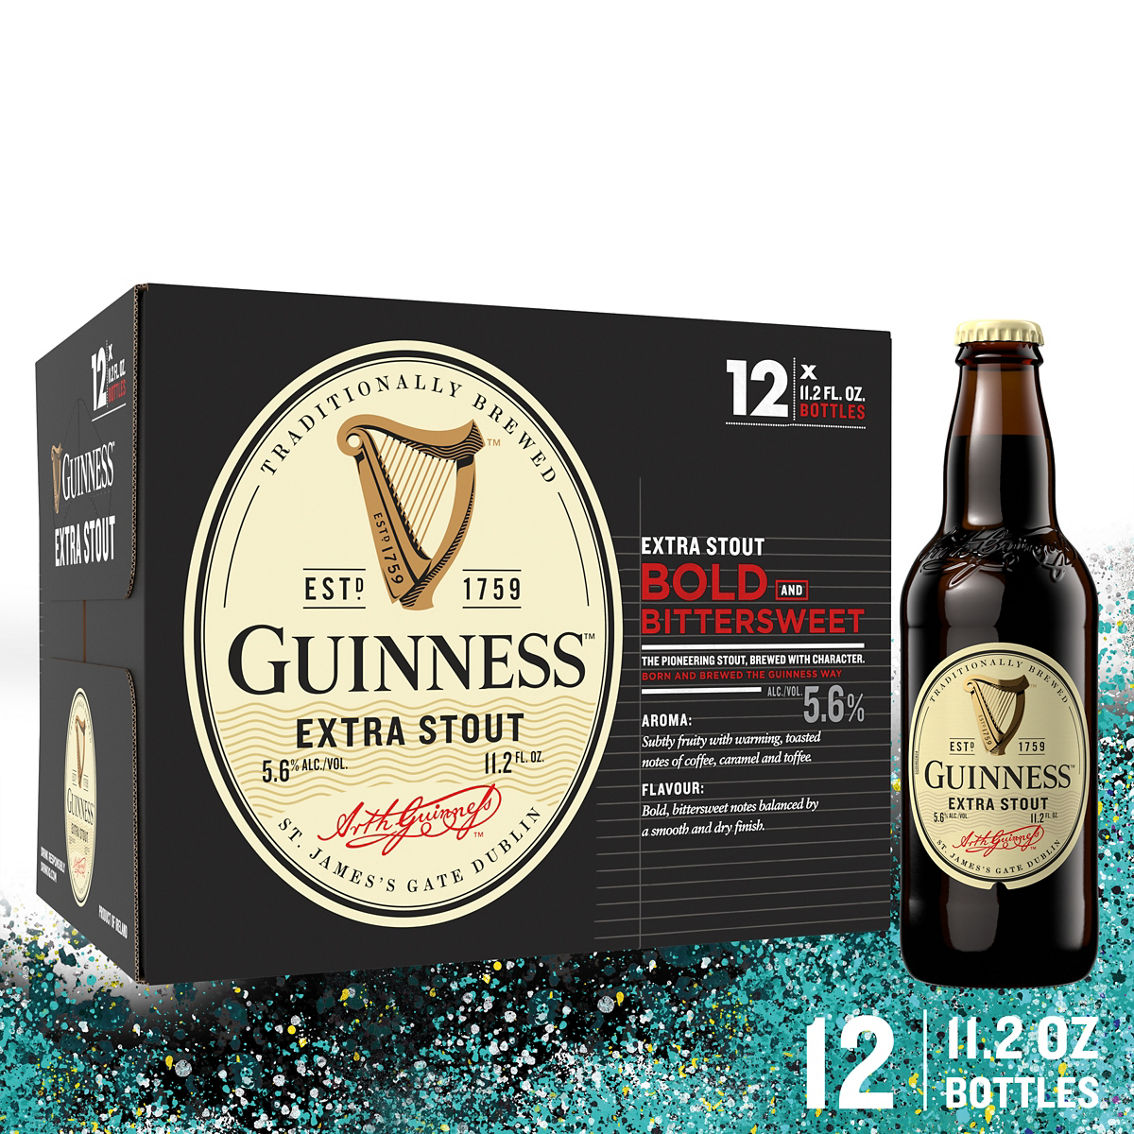 Guinness Extra Stout 11.2 oz. Bottle 12 pk. - Image 2 of 3